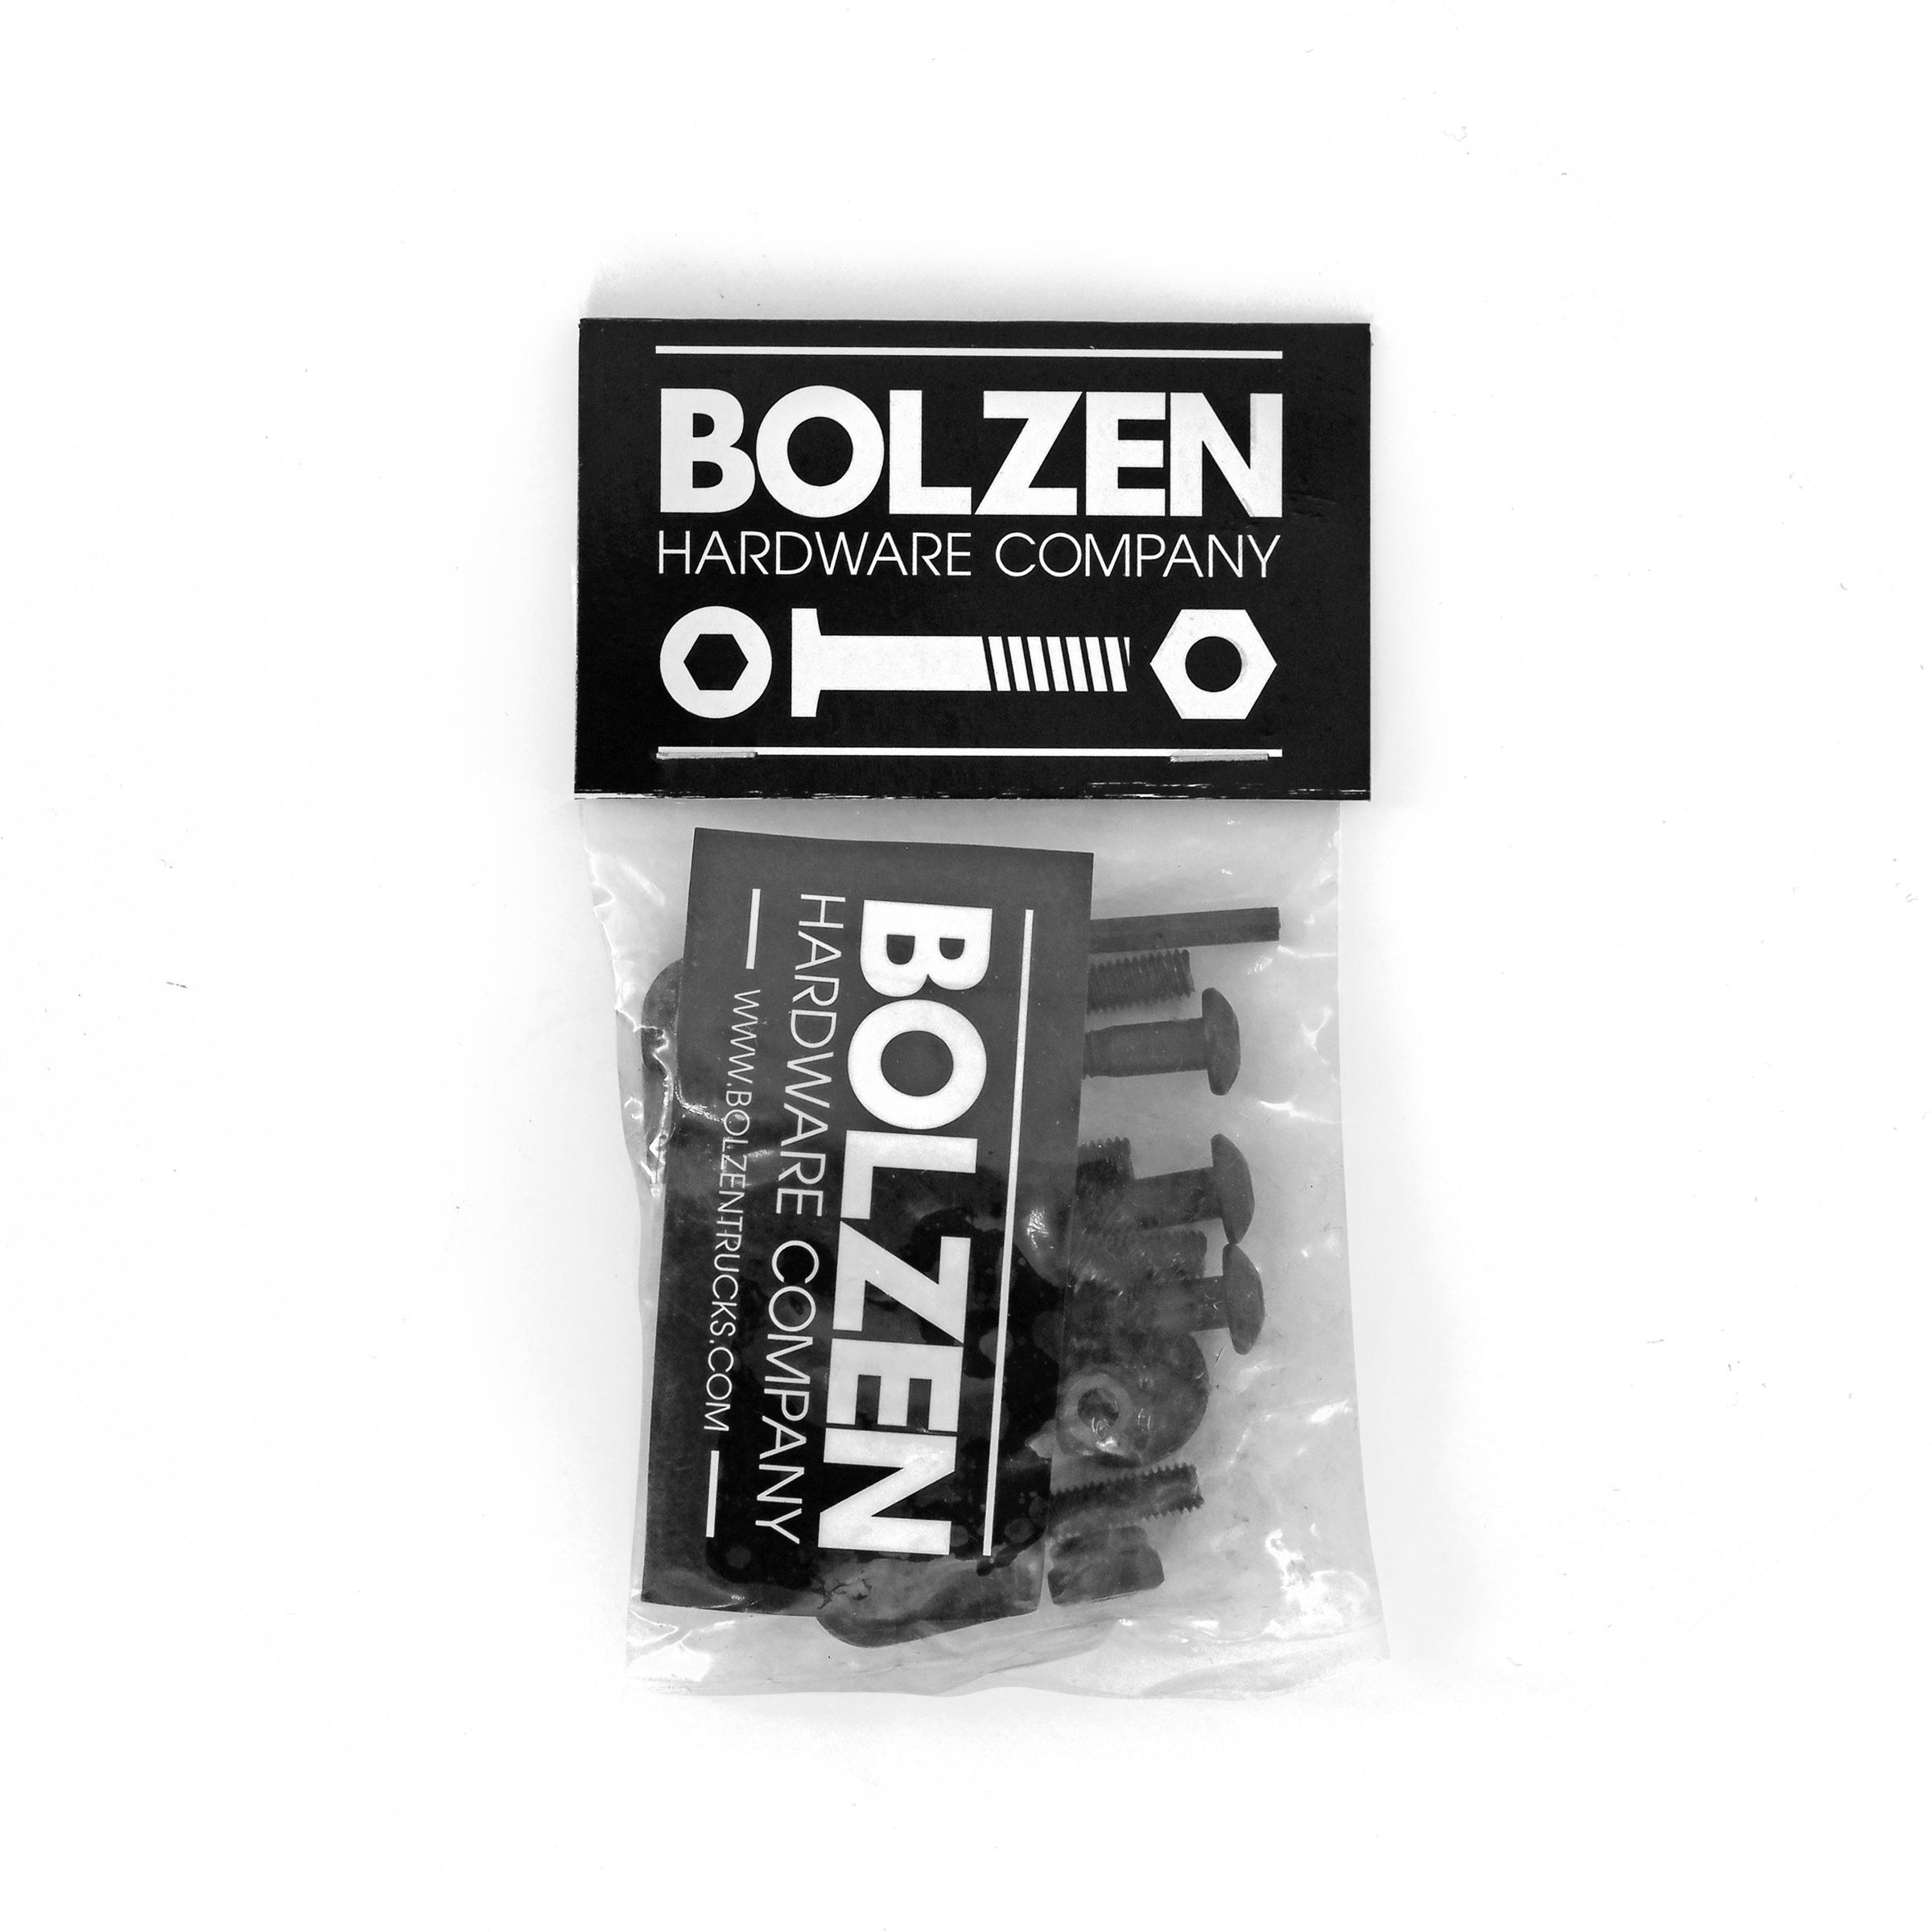 https://btflboards.com/media/image/2e/1f/db/Bolzen-Hardware-125inch-Schrauben-Set-verpackt.png